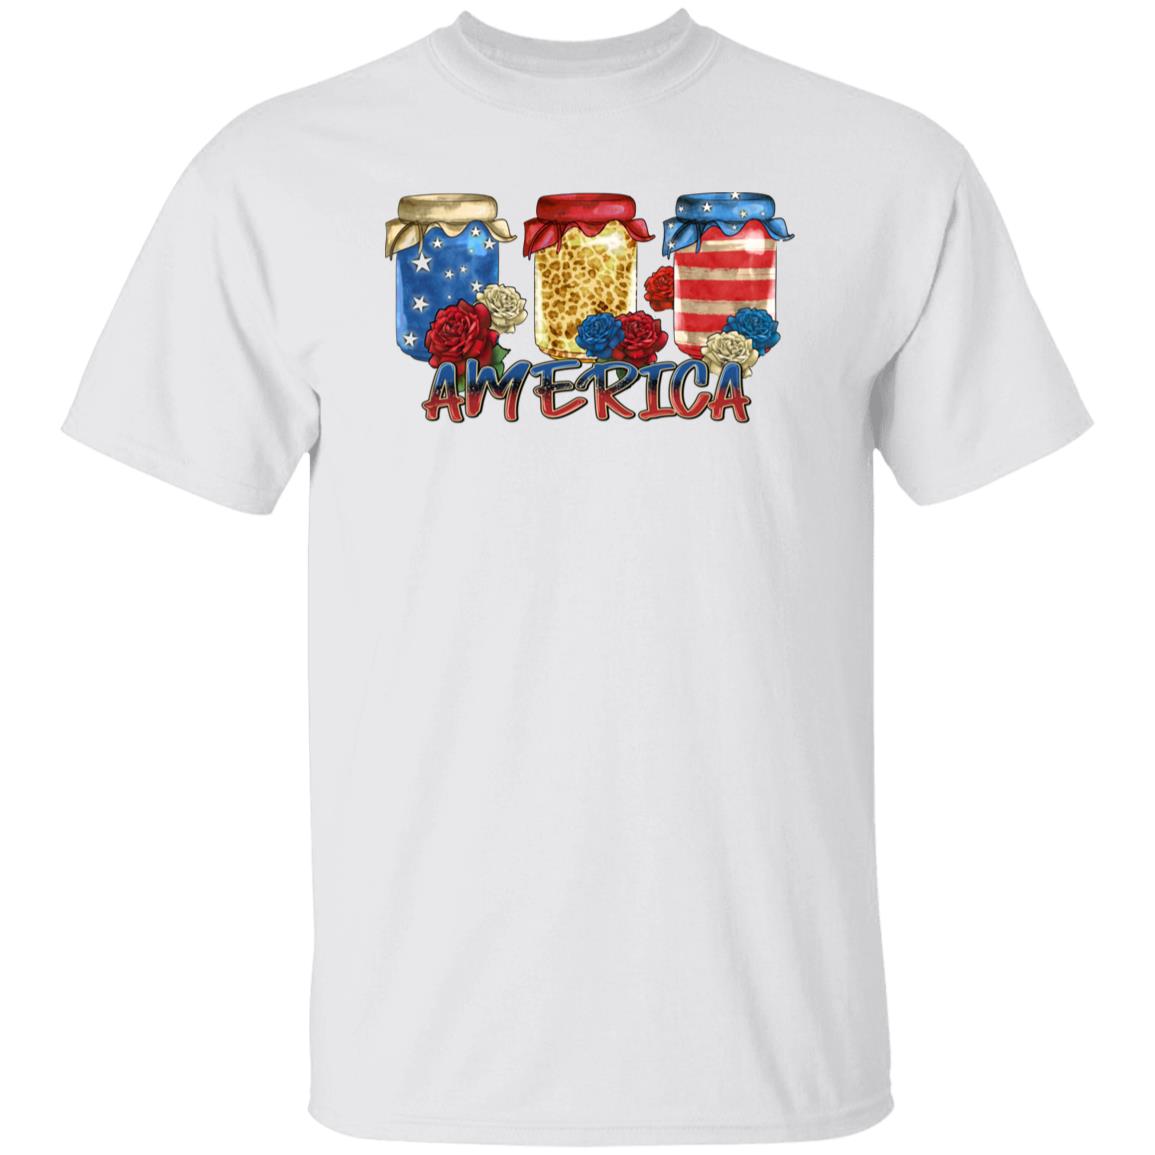 America mason jar T-Shirt Us flag Mason jar Unisex tee White Sand Grey-Family-Gift-Planet